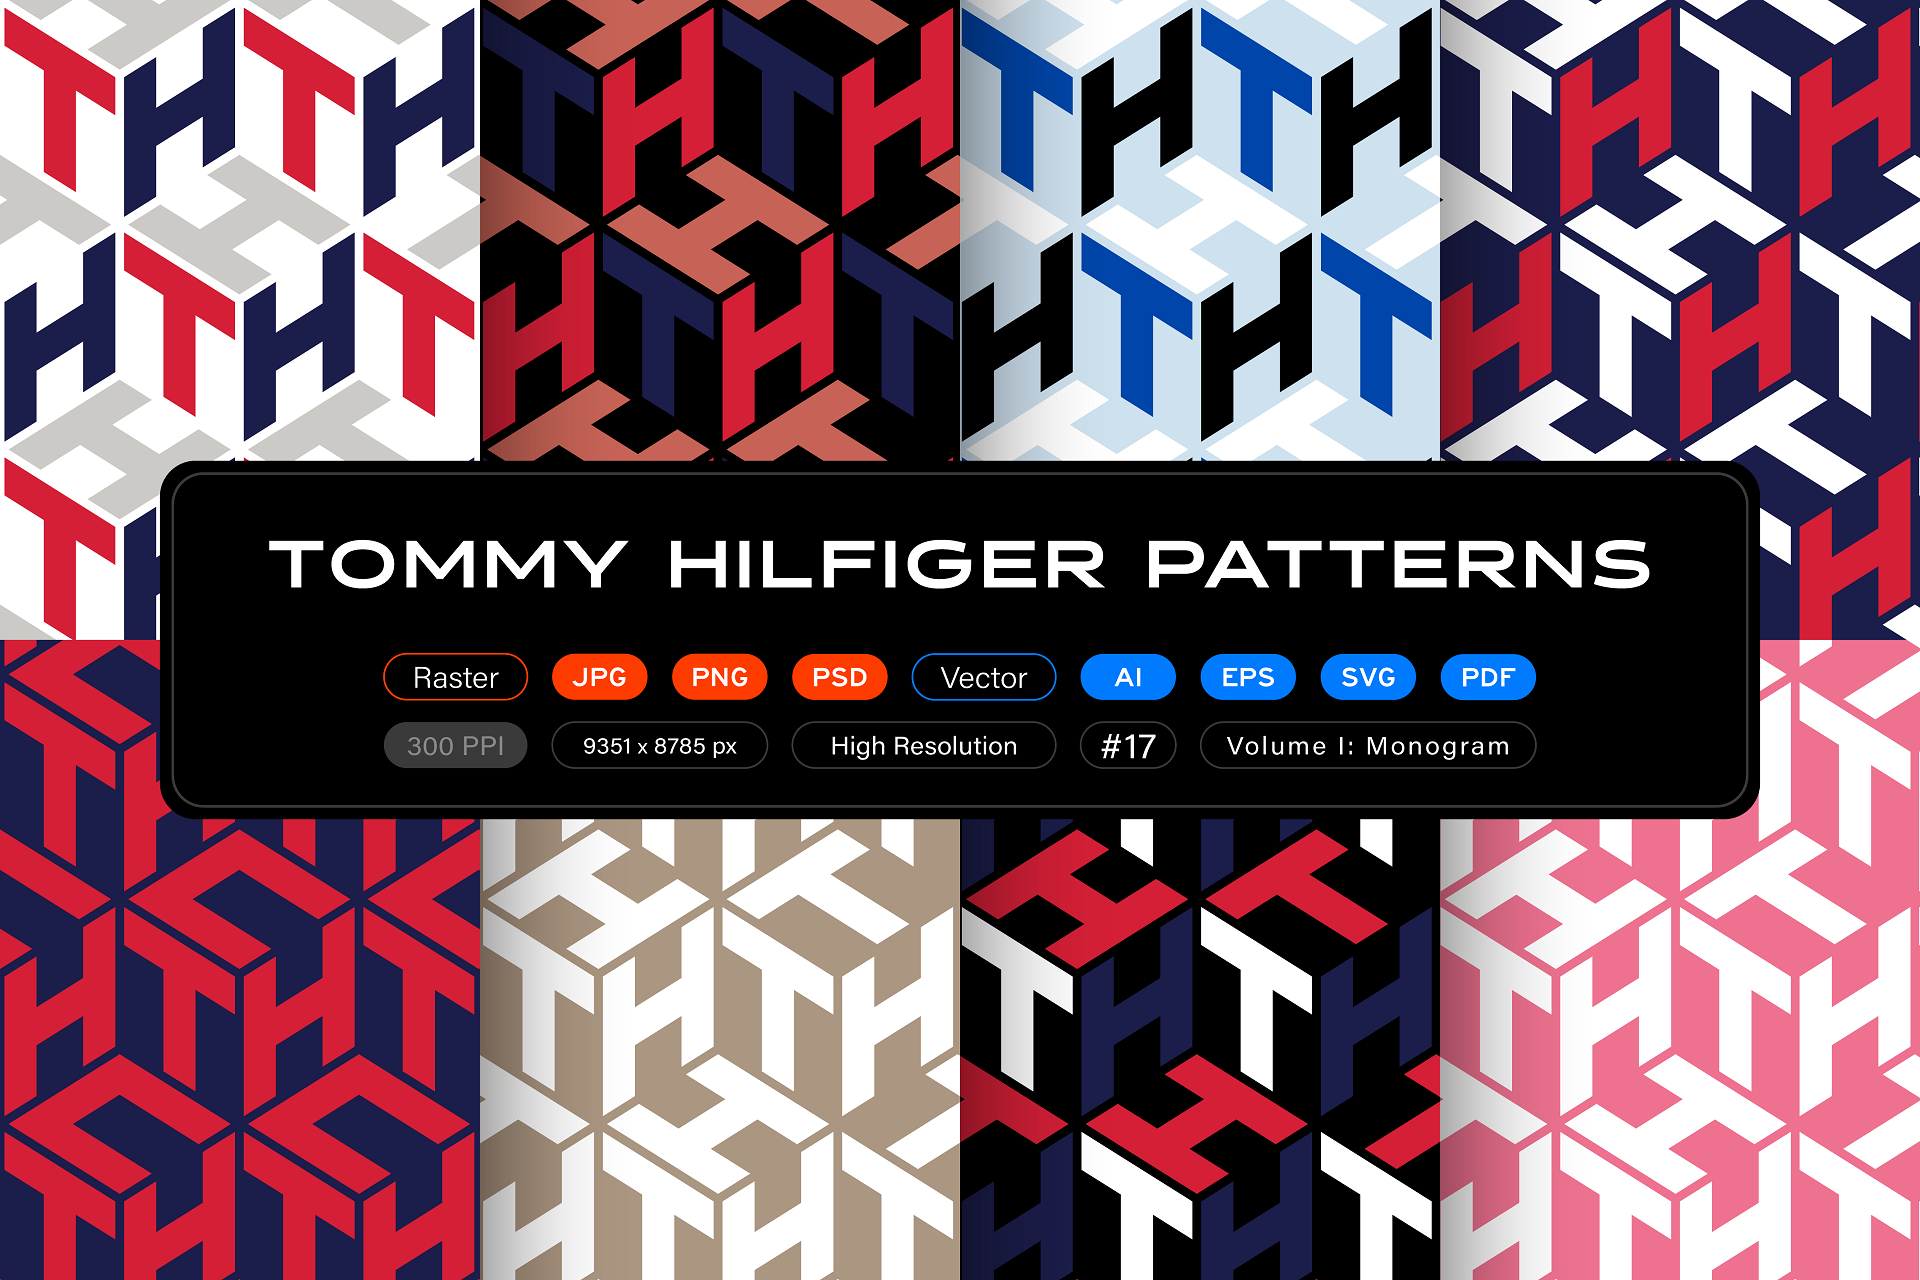 Tommy Hilfiger Patterns, Vol. 1: Monogram by itsfarahbakhsh on DeviantArt